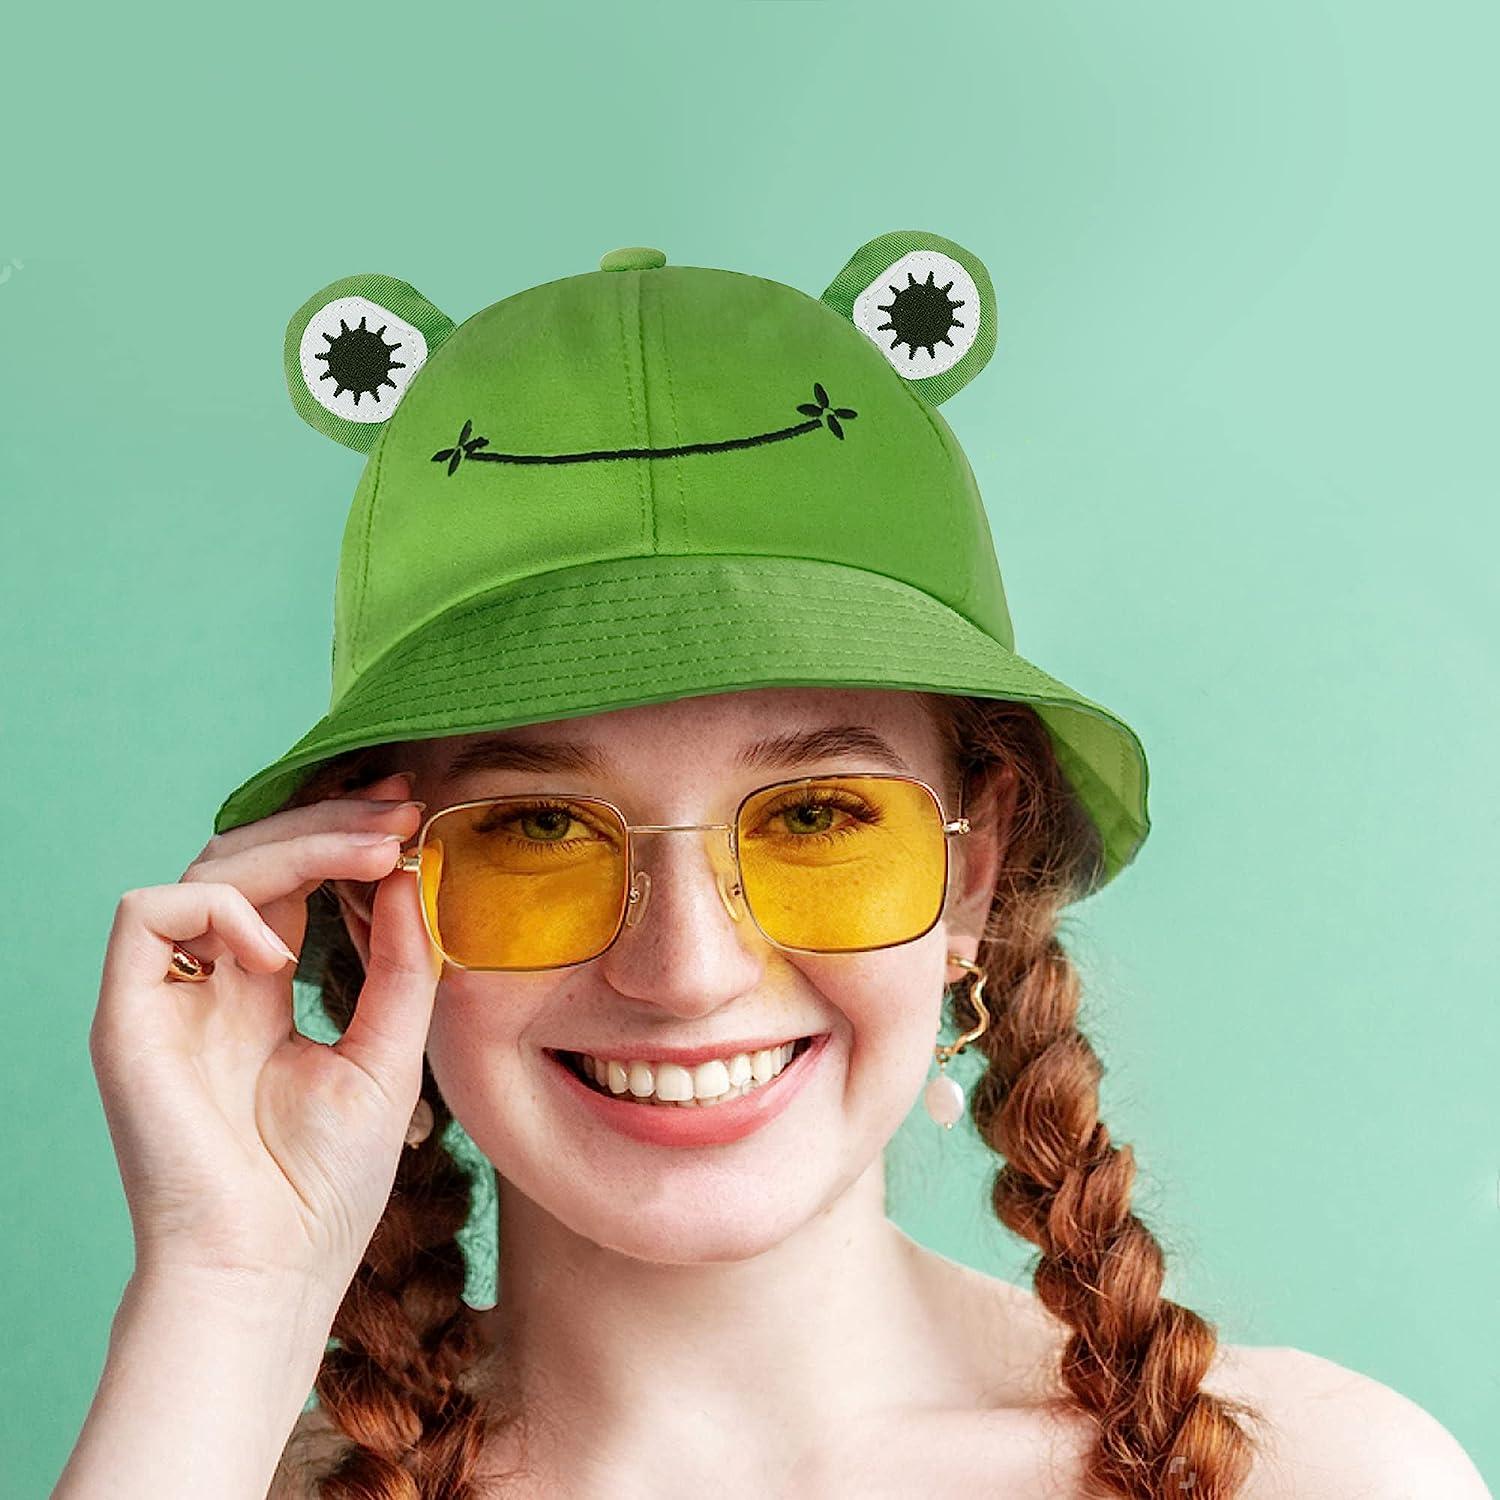 SAOROPEB Frog Hat for Adult Teens, Cute Frog Bucket Hat, Cotton Bucket Hat  Funny Hat Fisherman Hat for Men Women Green